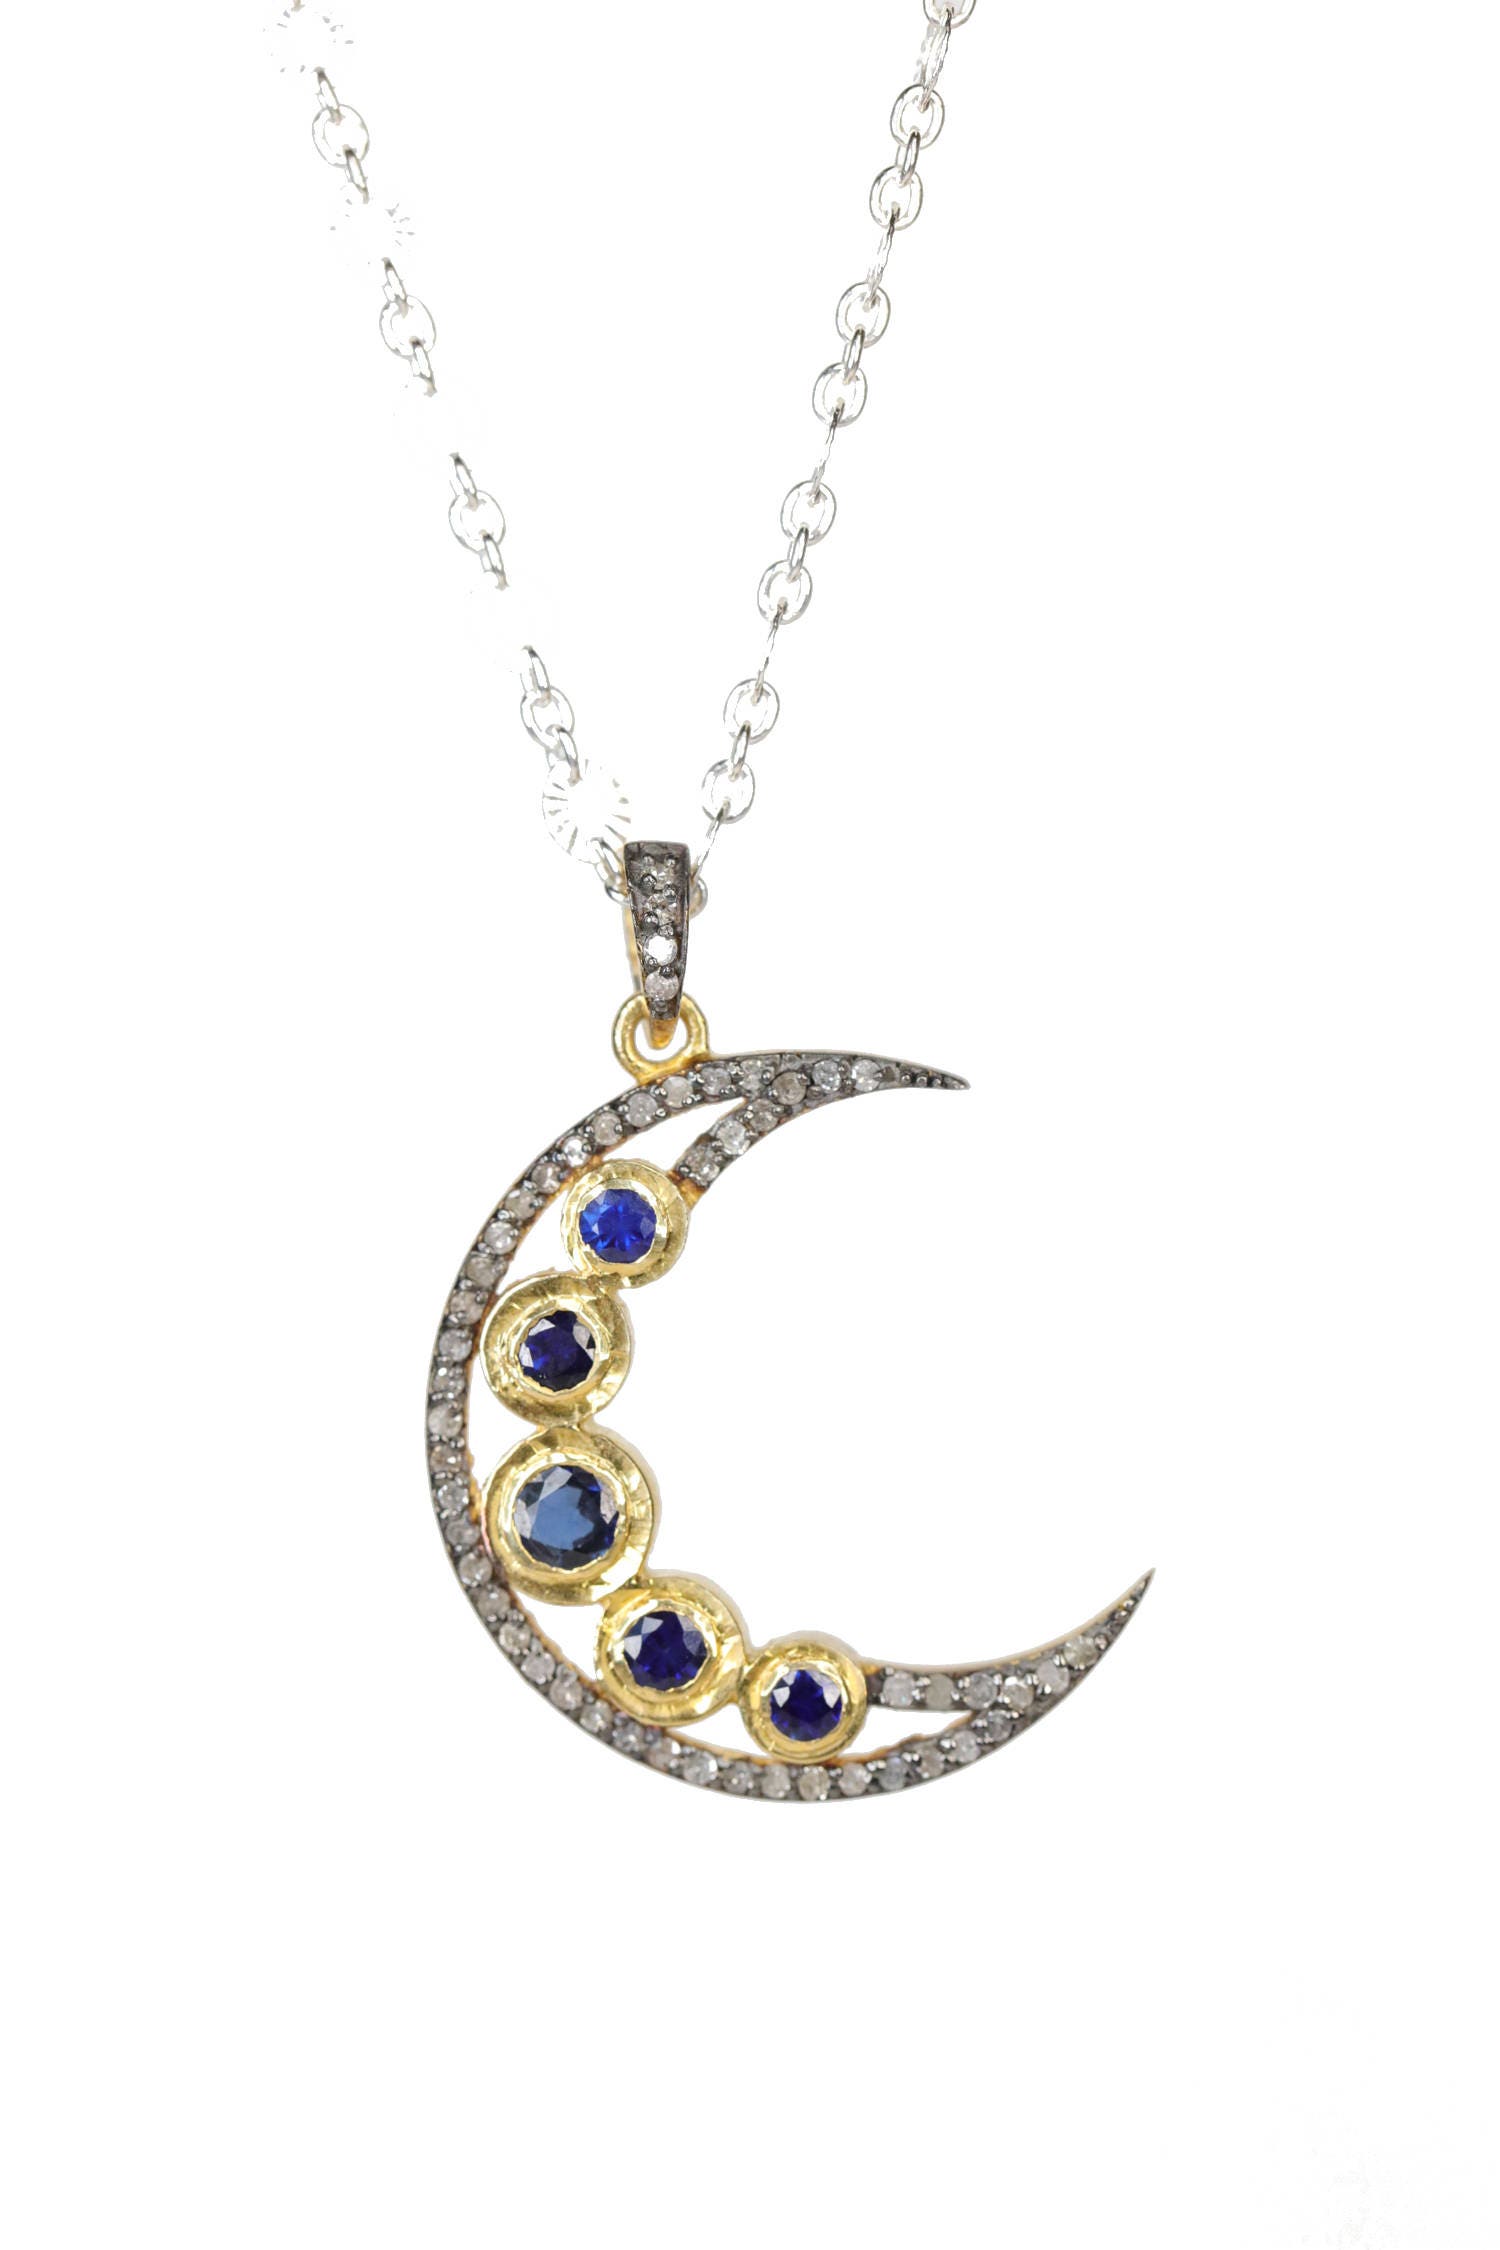 Blue Sapphire Crescent Moon Necklace Pave Diamond large moon | Etsy